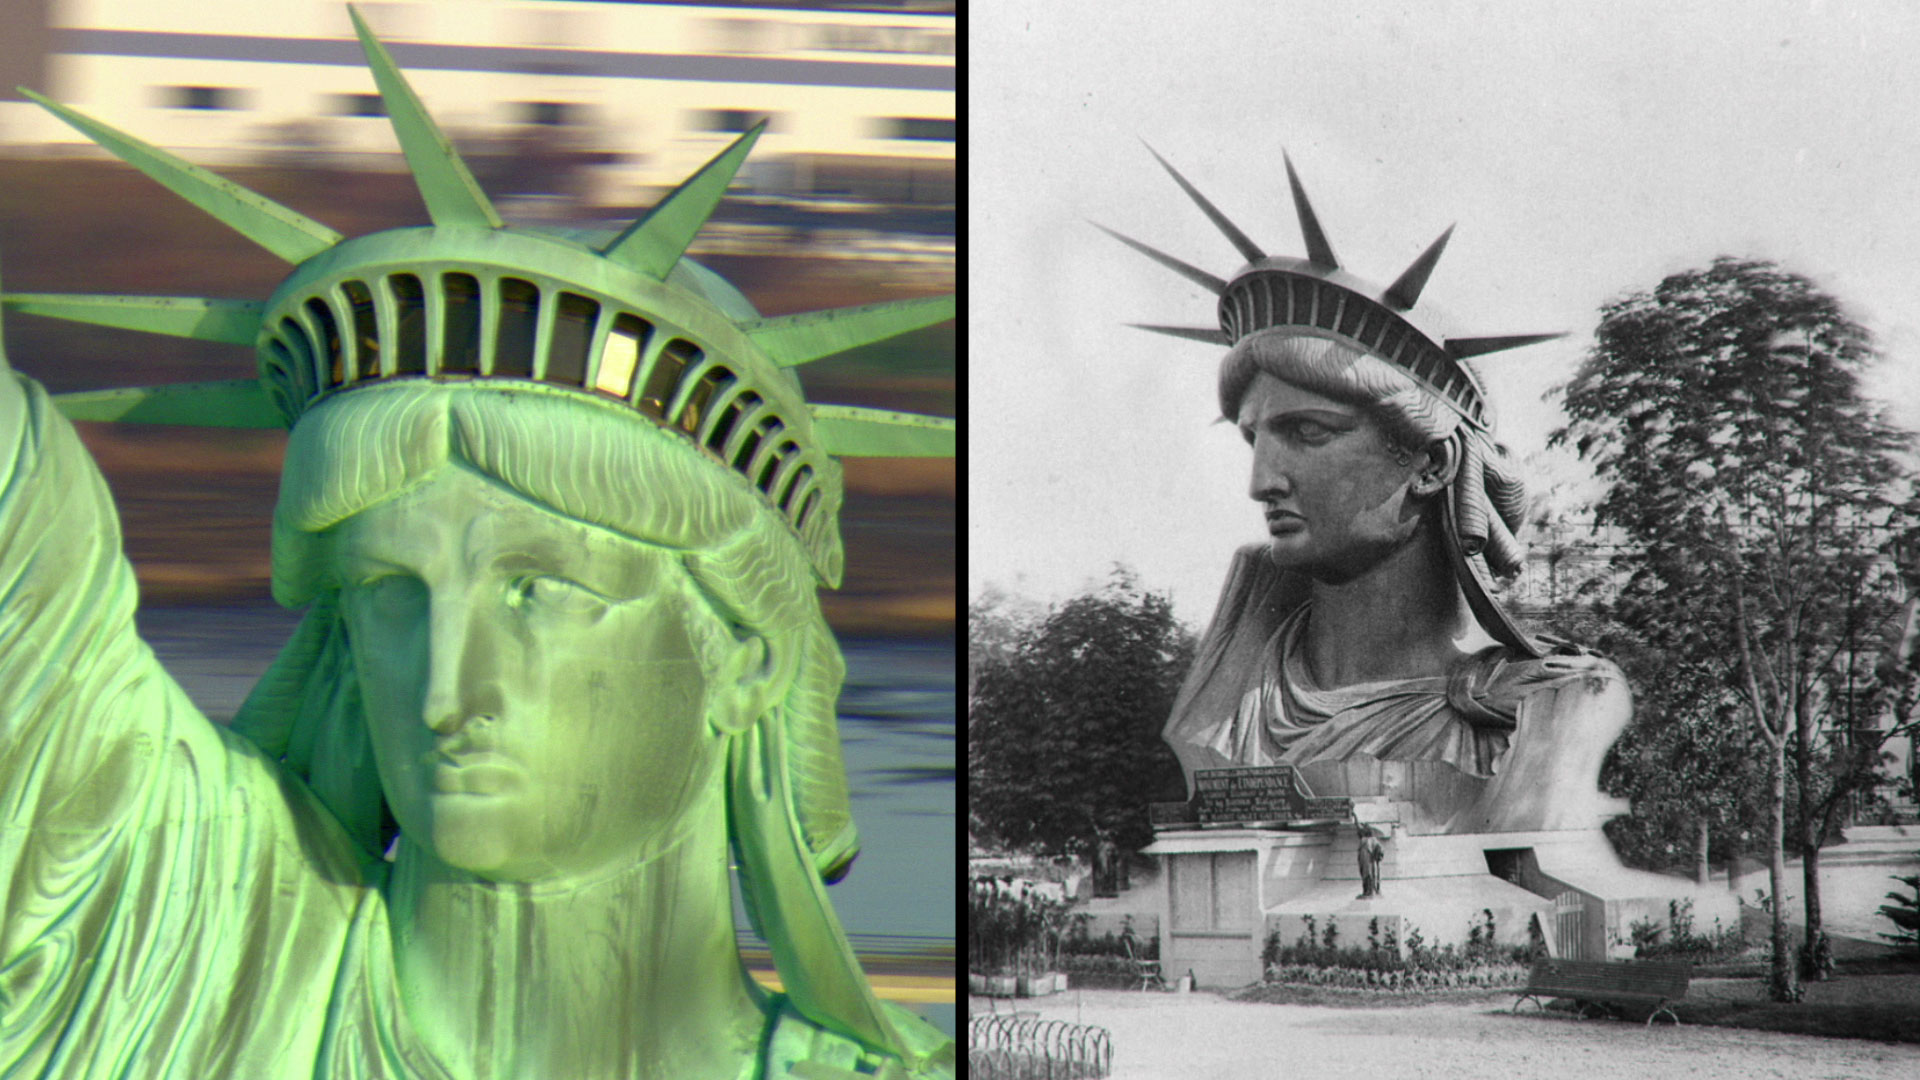 Statue of Liberty arrives in New York Harbor, June 17, 1885